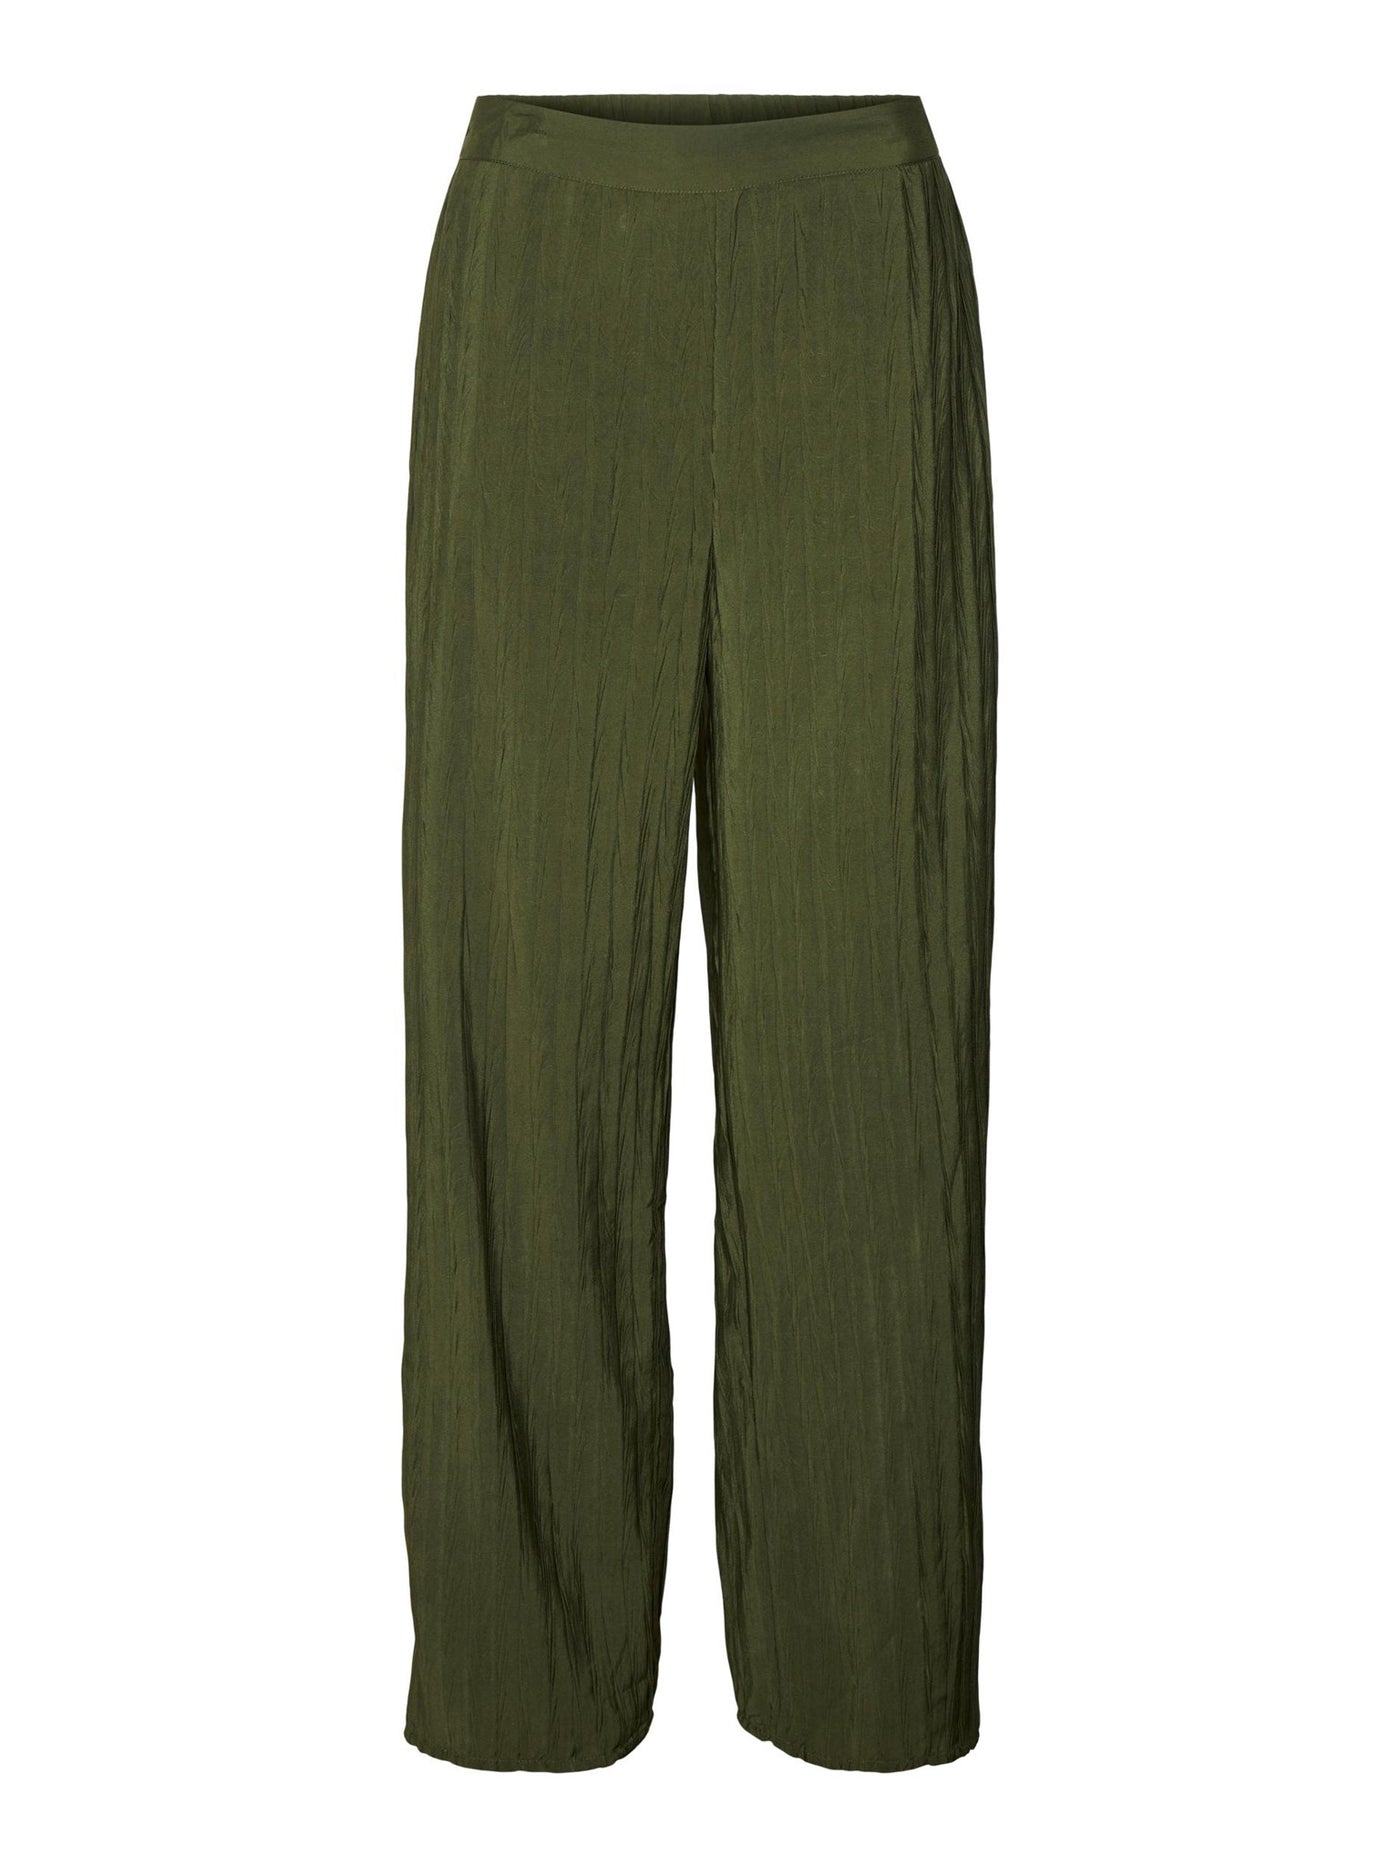 Carrie Wide Pants - Rifle Green - Vero Moda - Grön 5